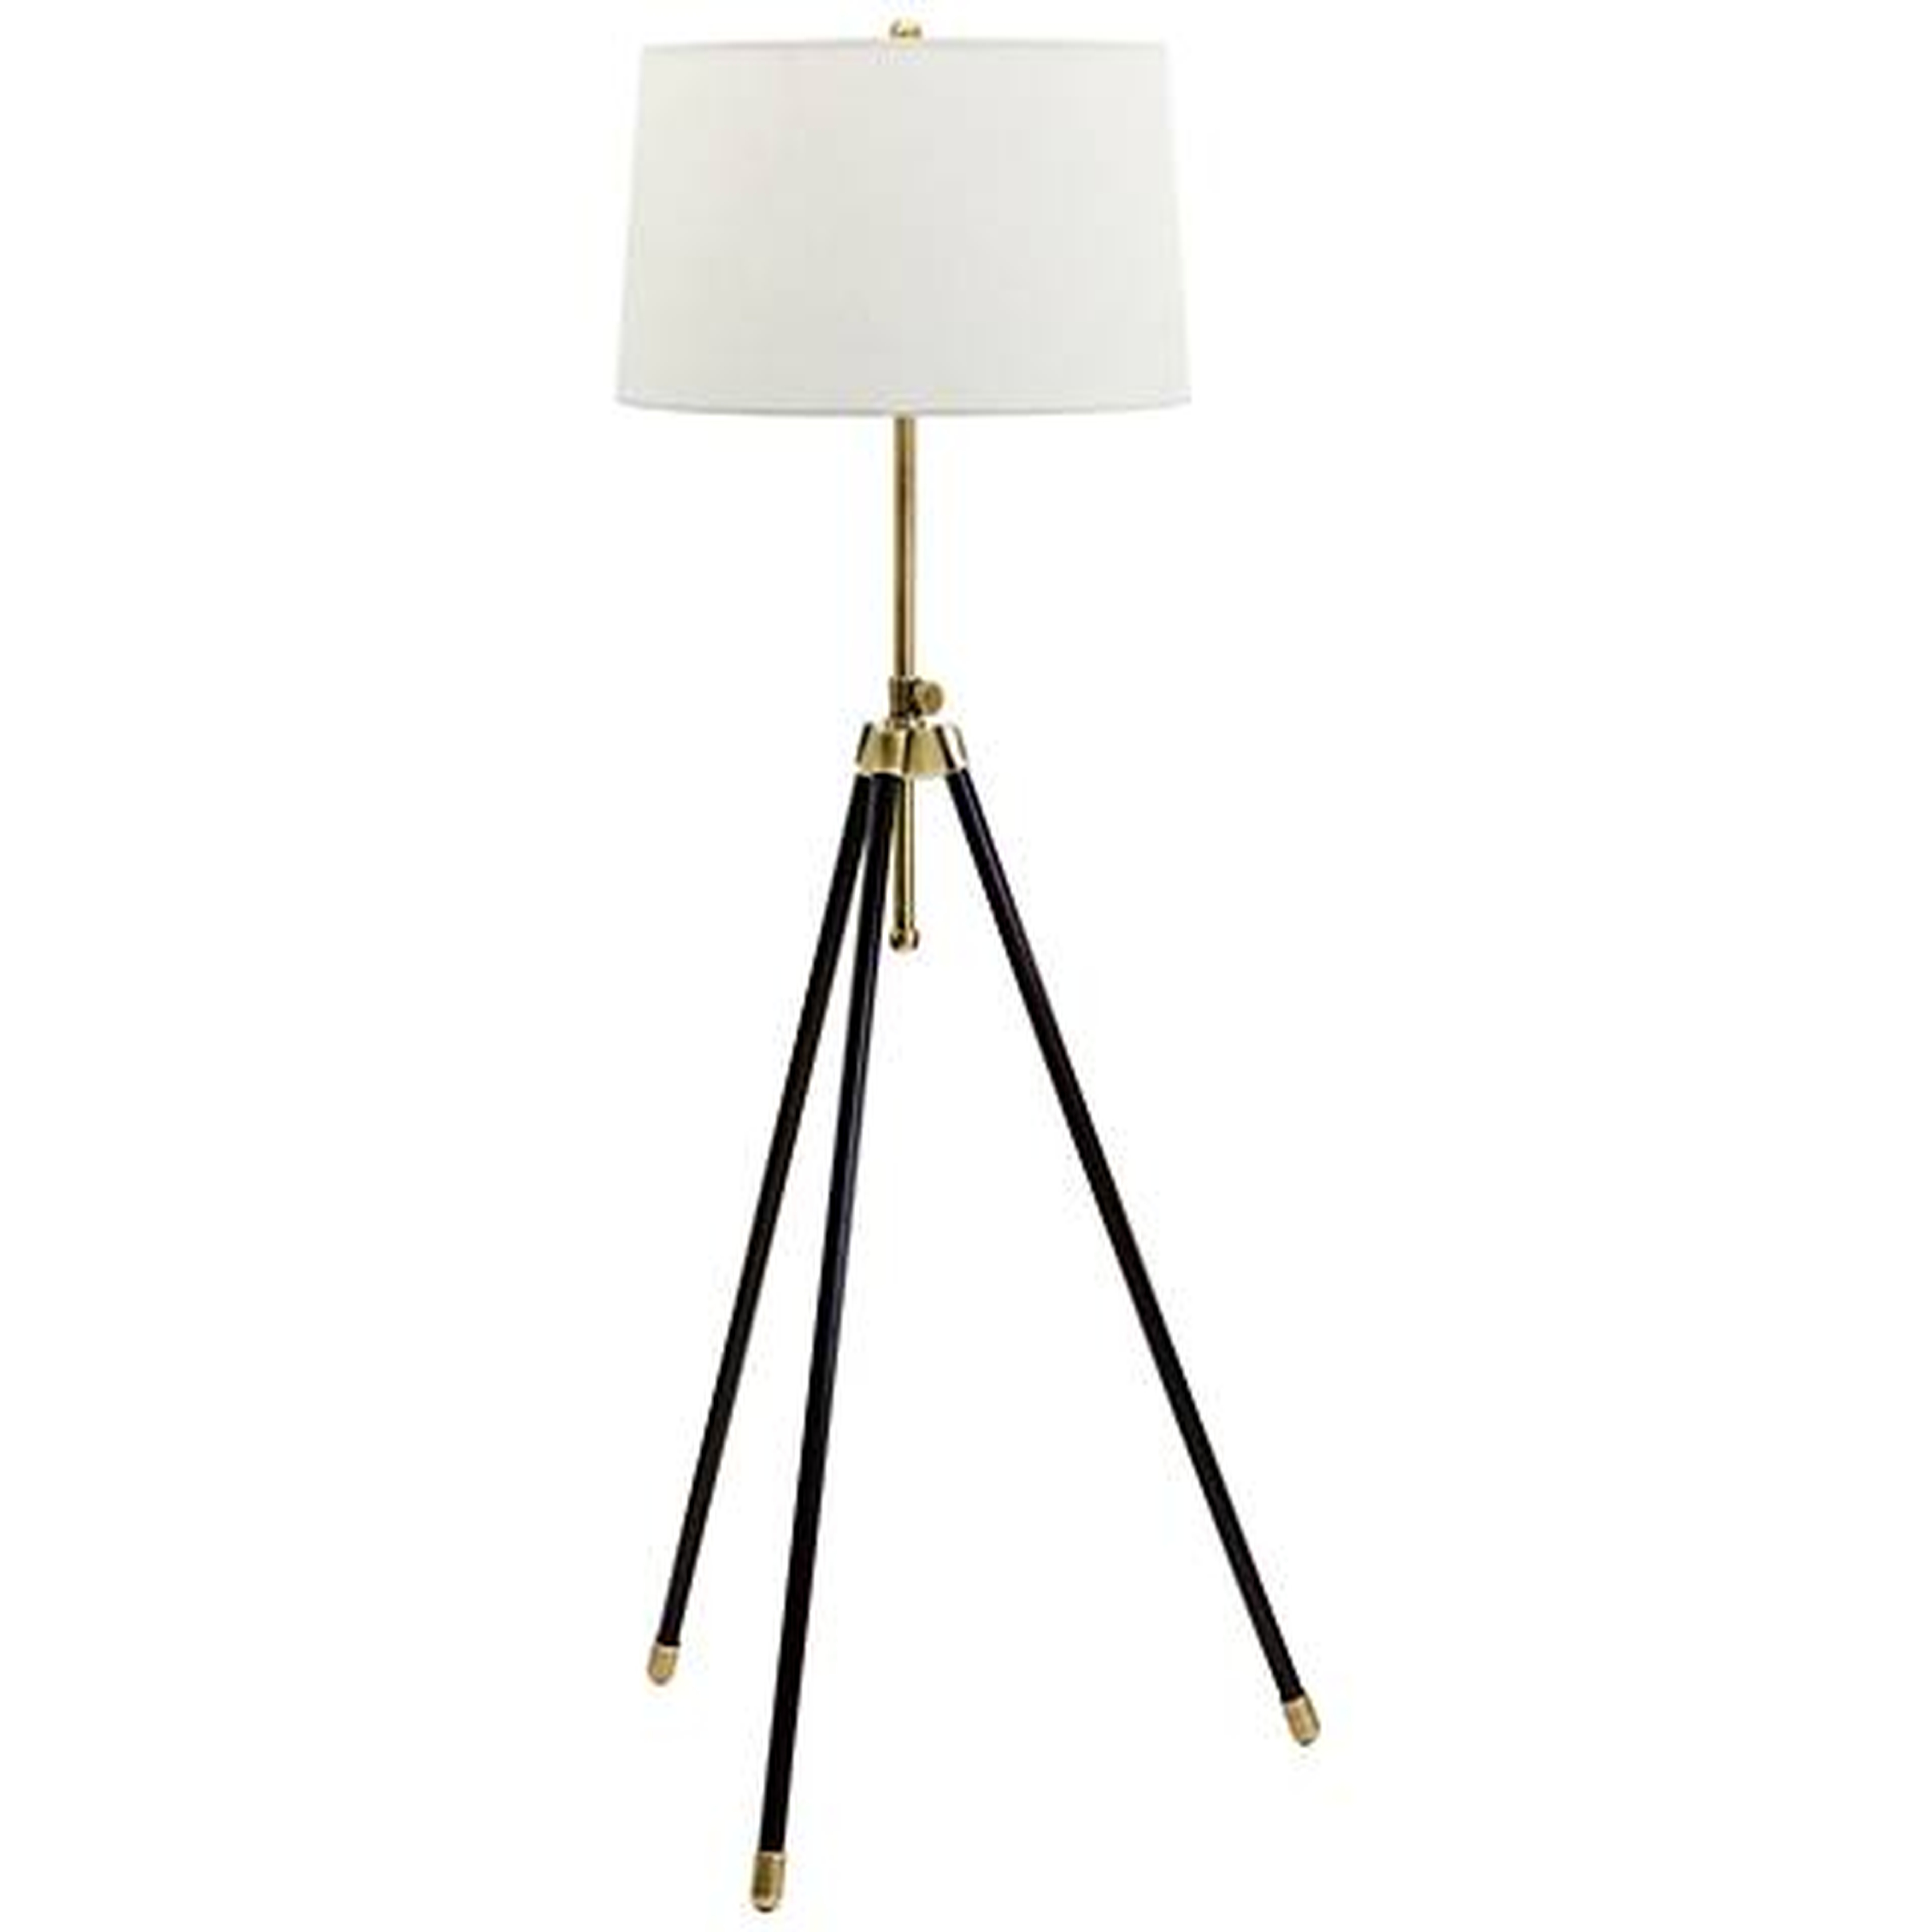 House of Troy Adjustable Antique Brass Tripod Floor Lamp - Lamps Plus